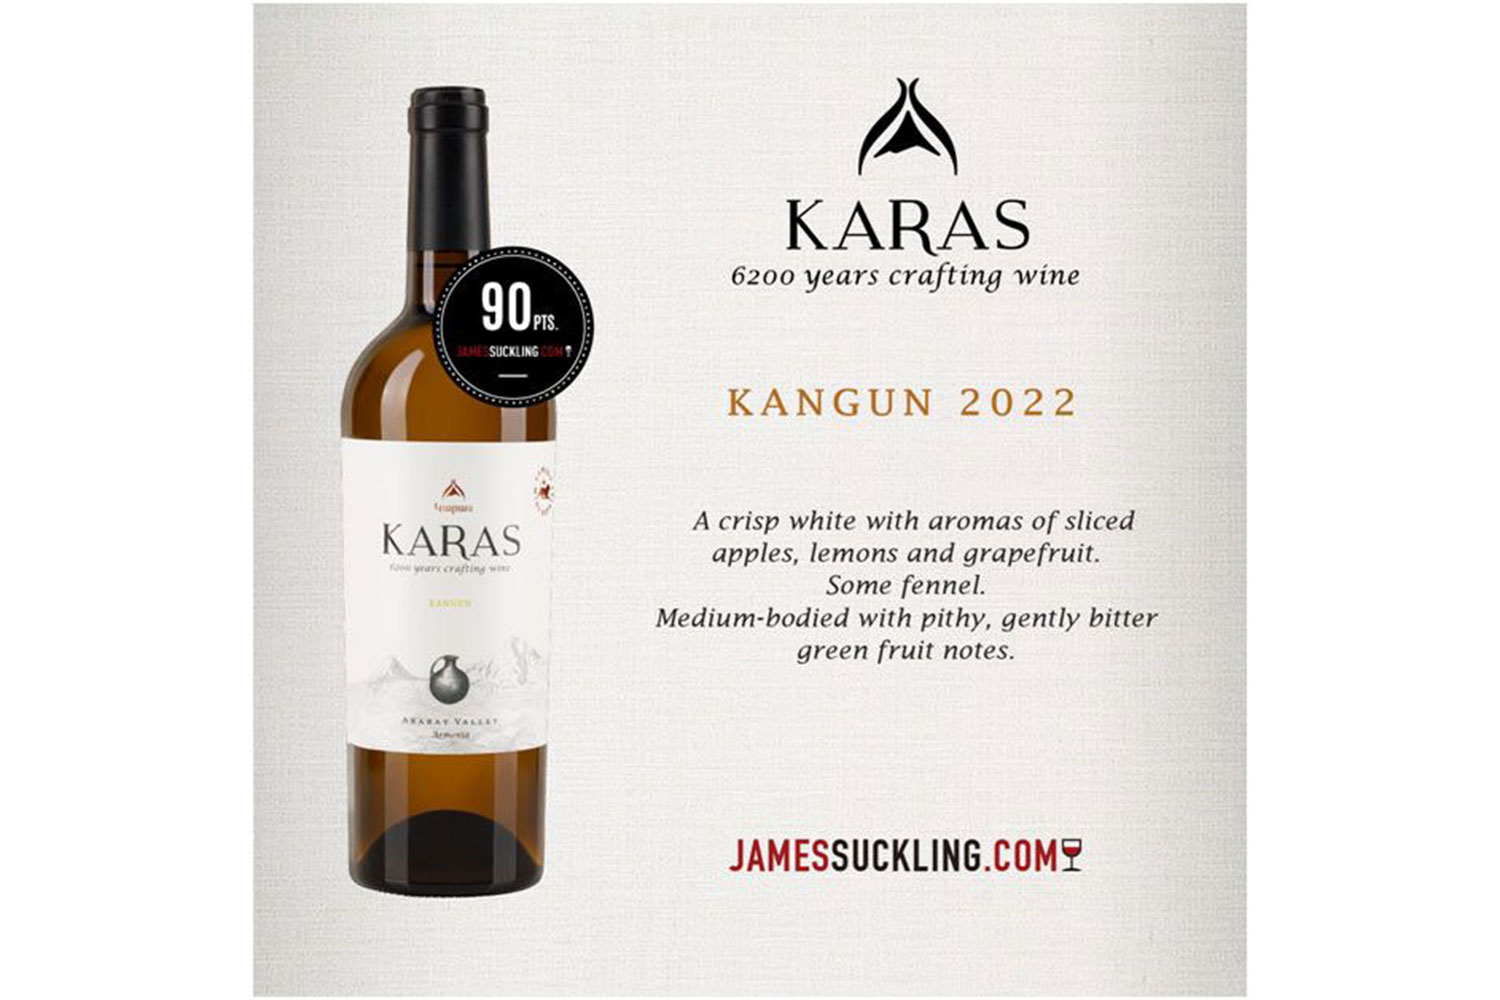 Karas Wines receive 4 prestigious international awards